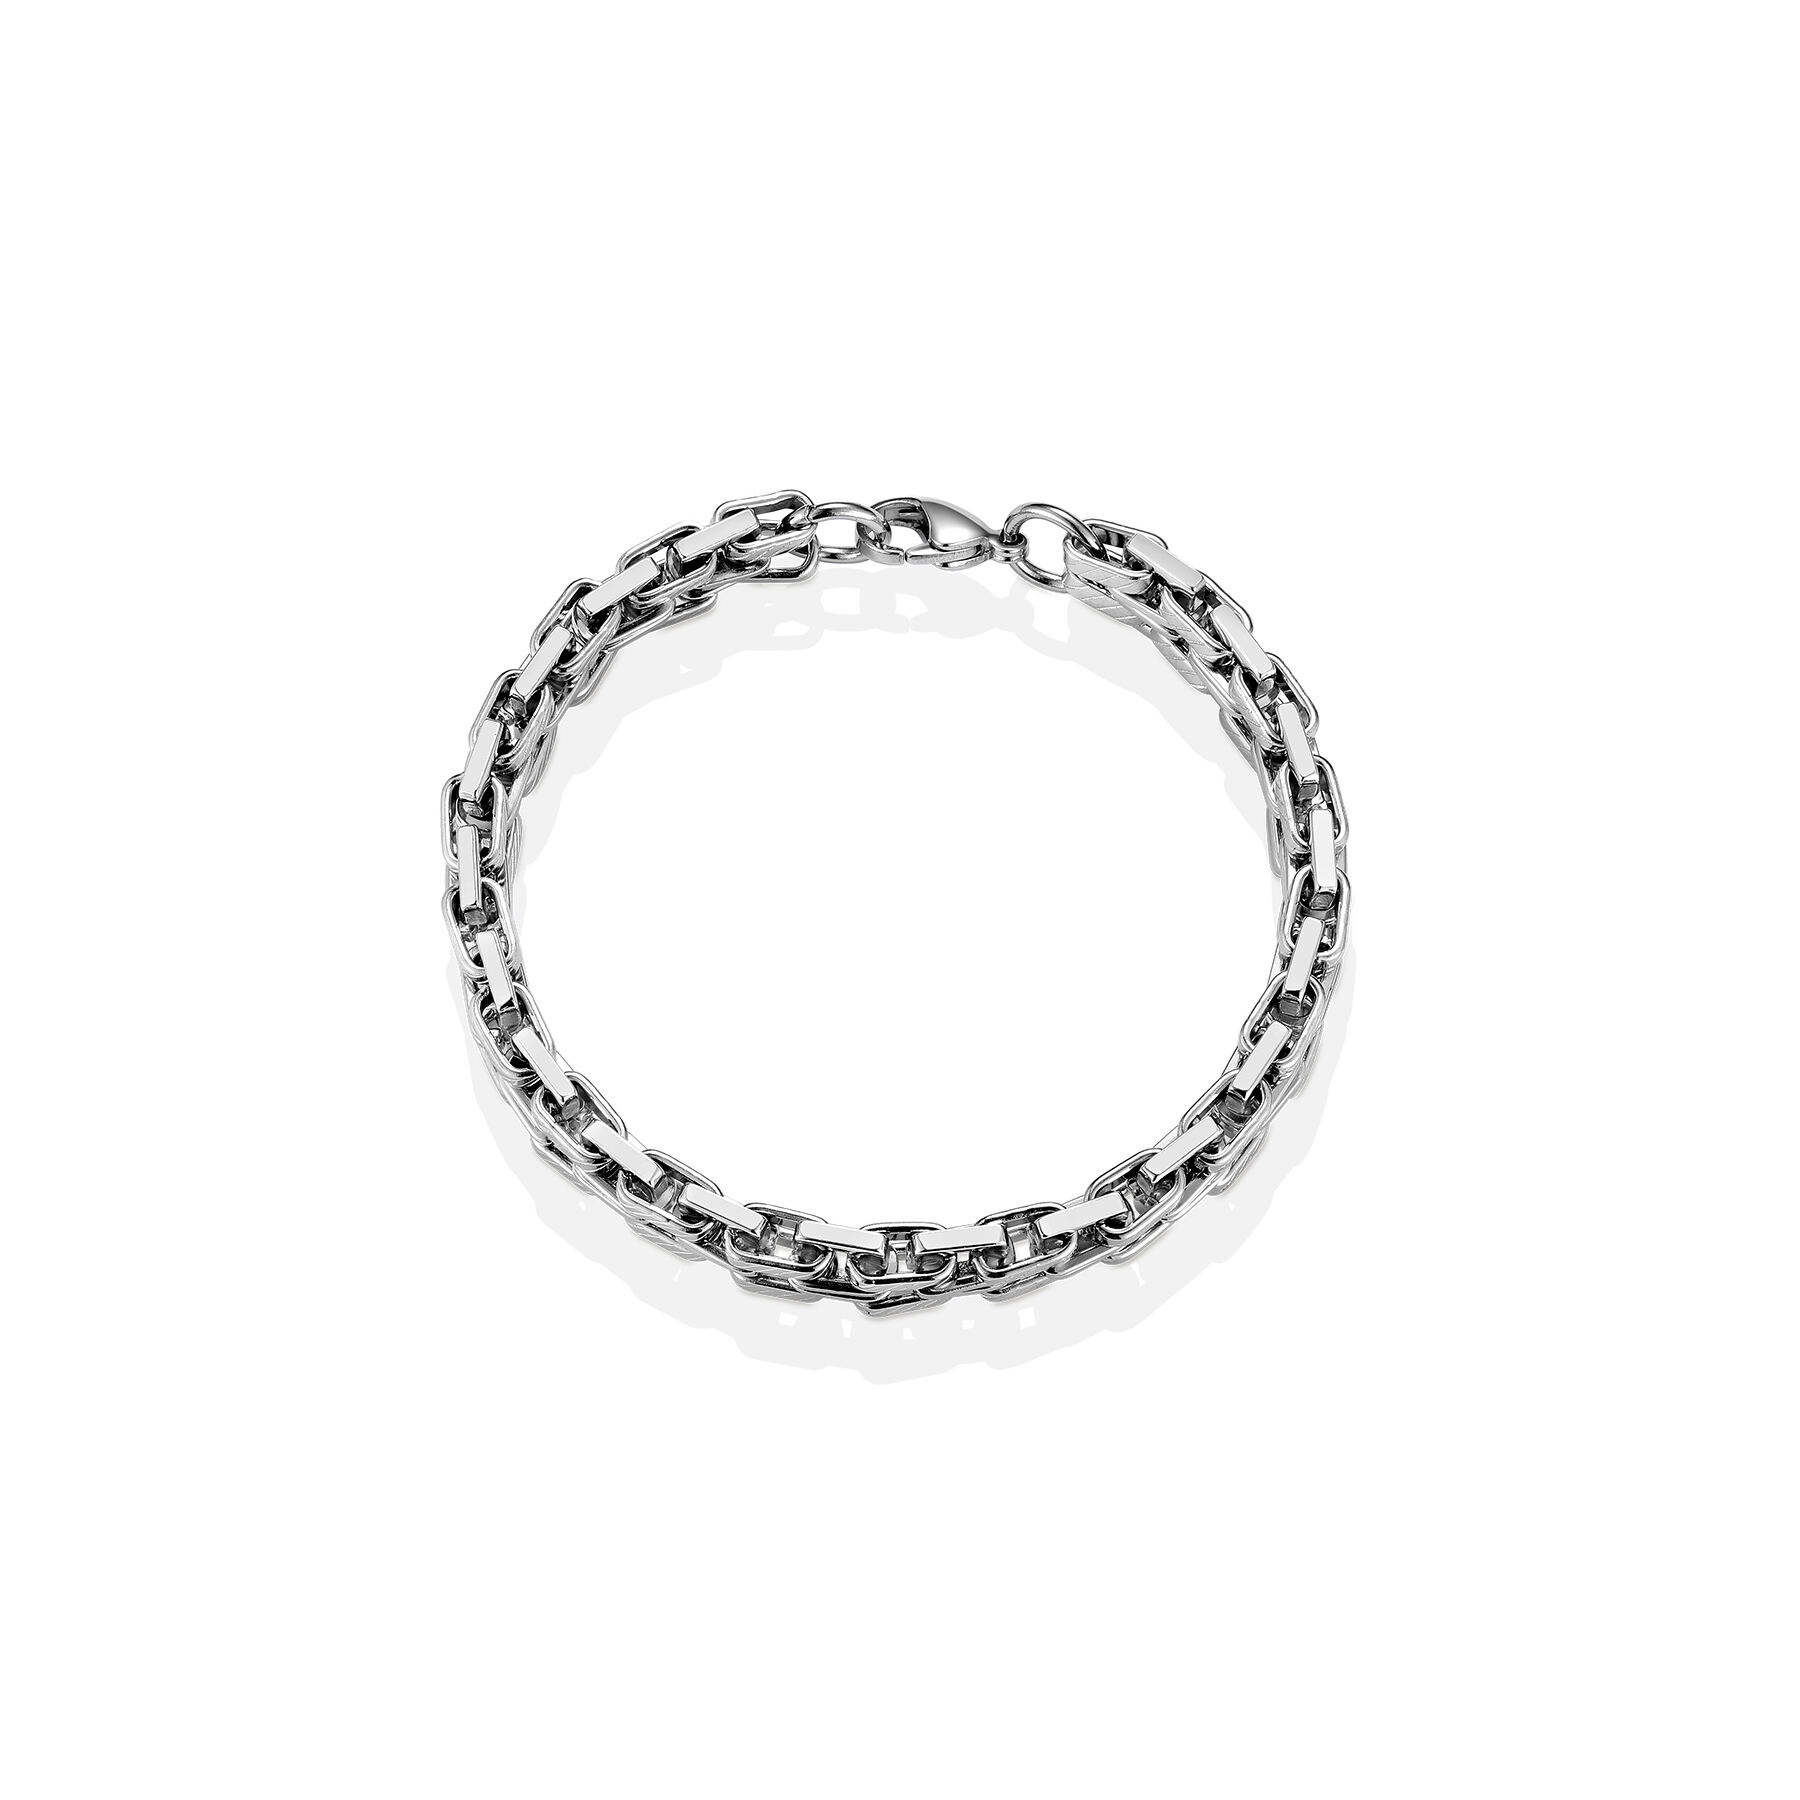 Stainless steel silver Multiple square chains bracelet for men